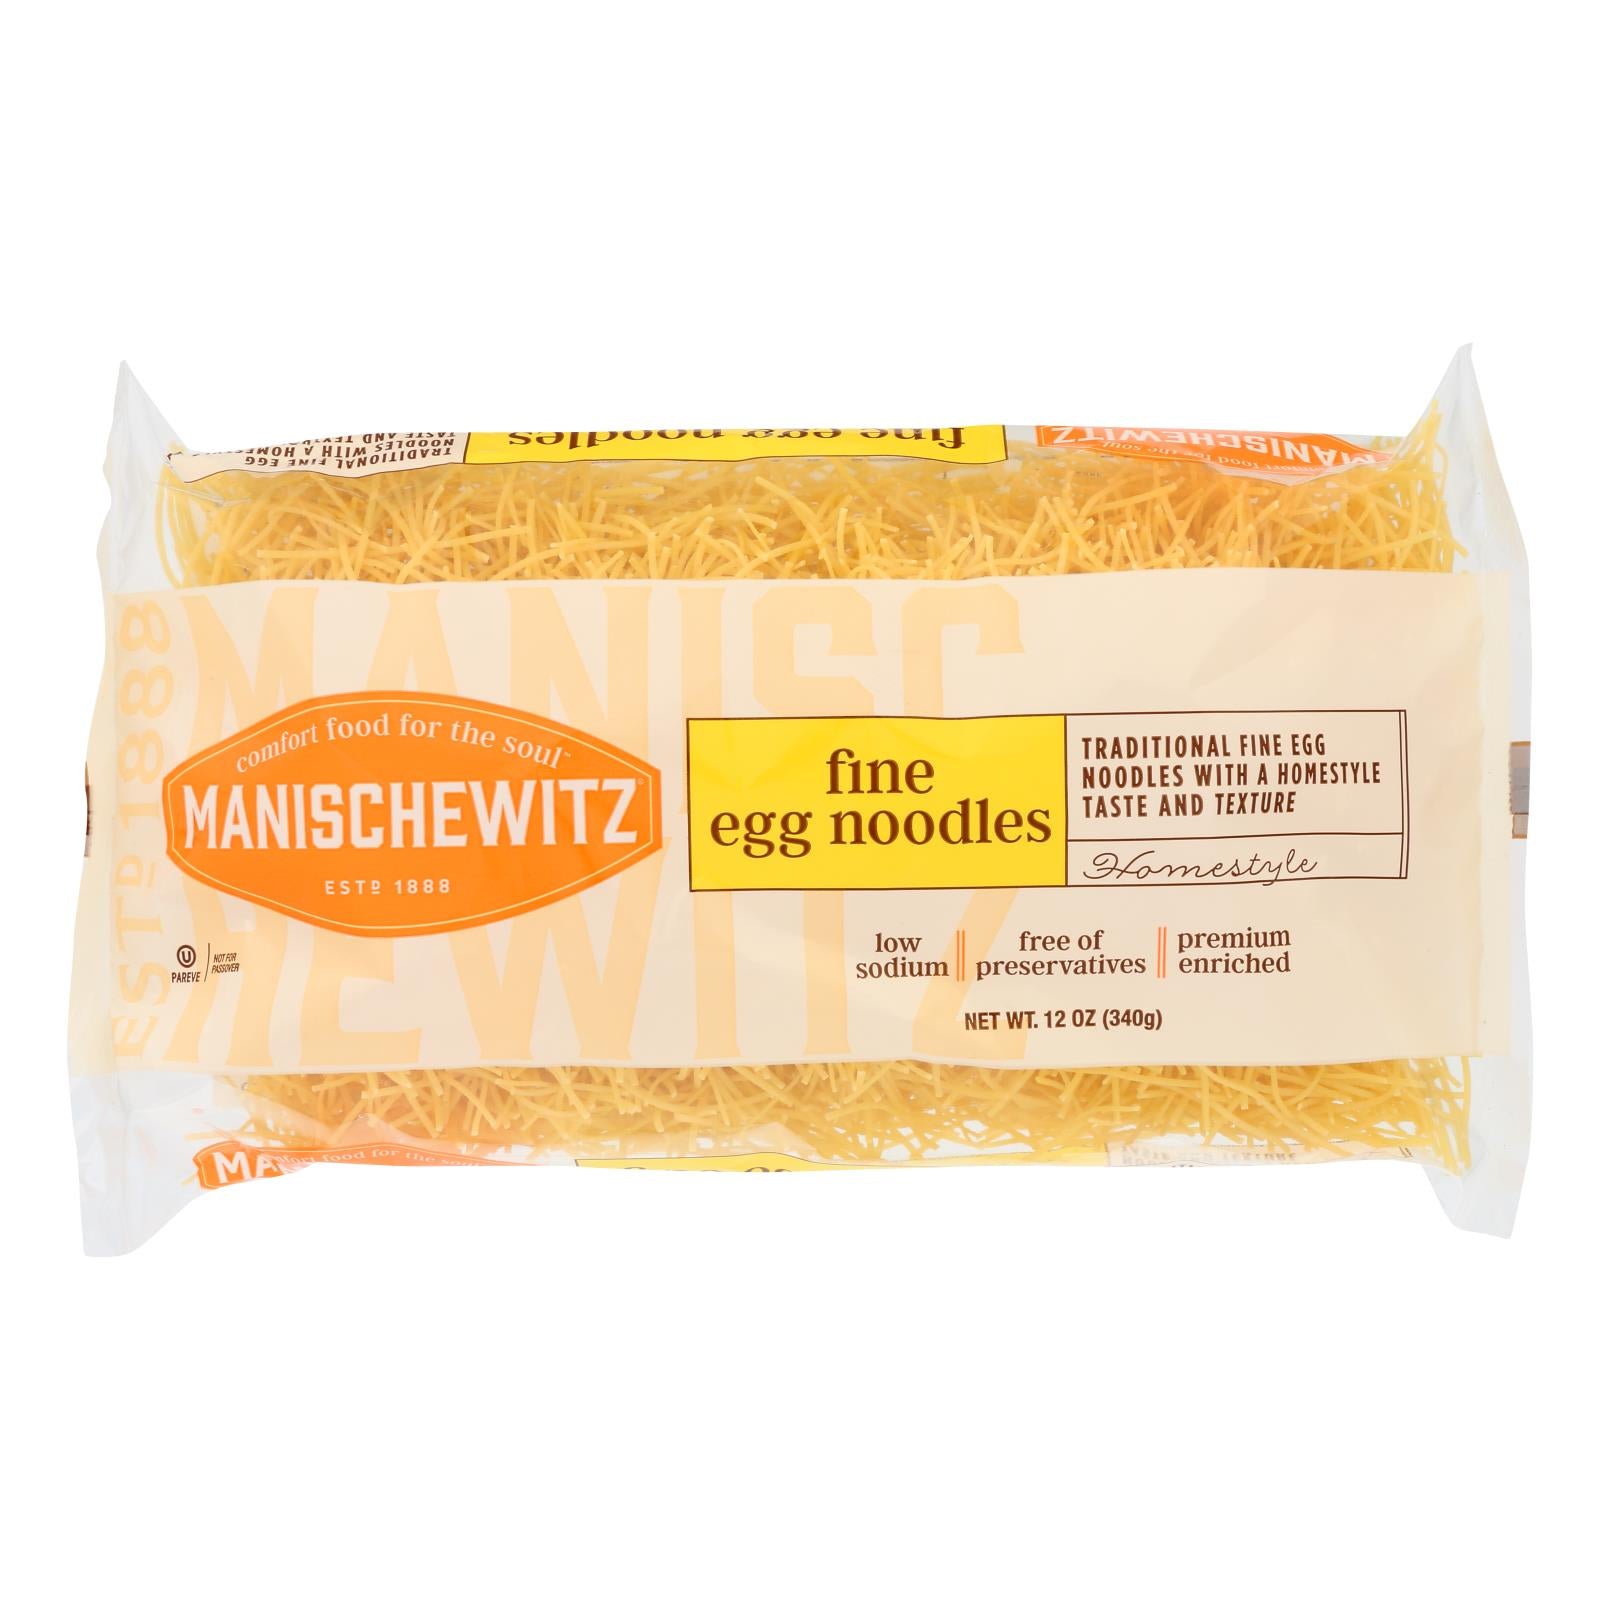 Manischewitz, Manischewitz - Nouilles aux œufs - Fines - Caisse de 12 - 12 oz (paquet de 12)